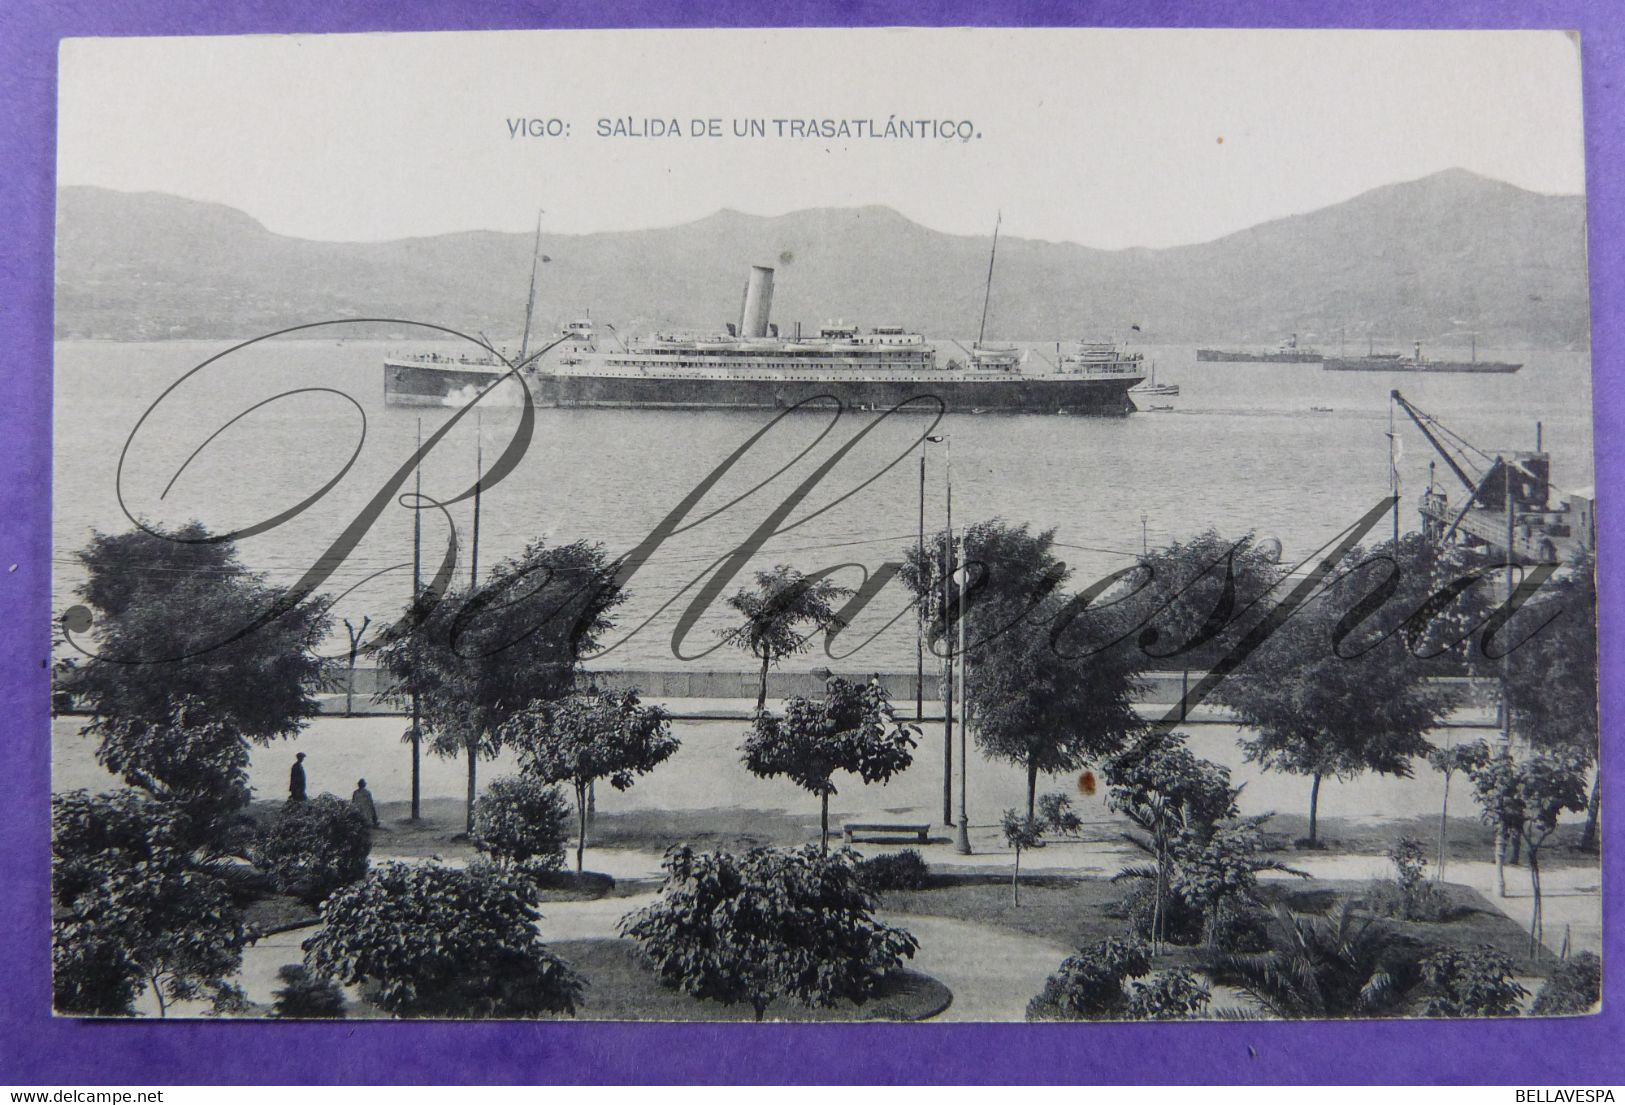 Salida De Un Trasatlantico, Vigo Galicia Pontevega Transatlantic Steamer. (White Or  Red Star ?) Line - Passagiersschepen